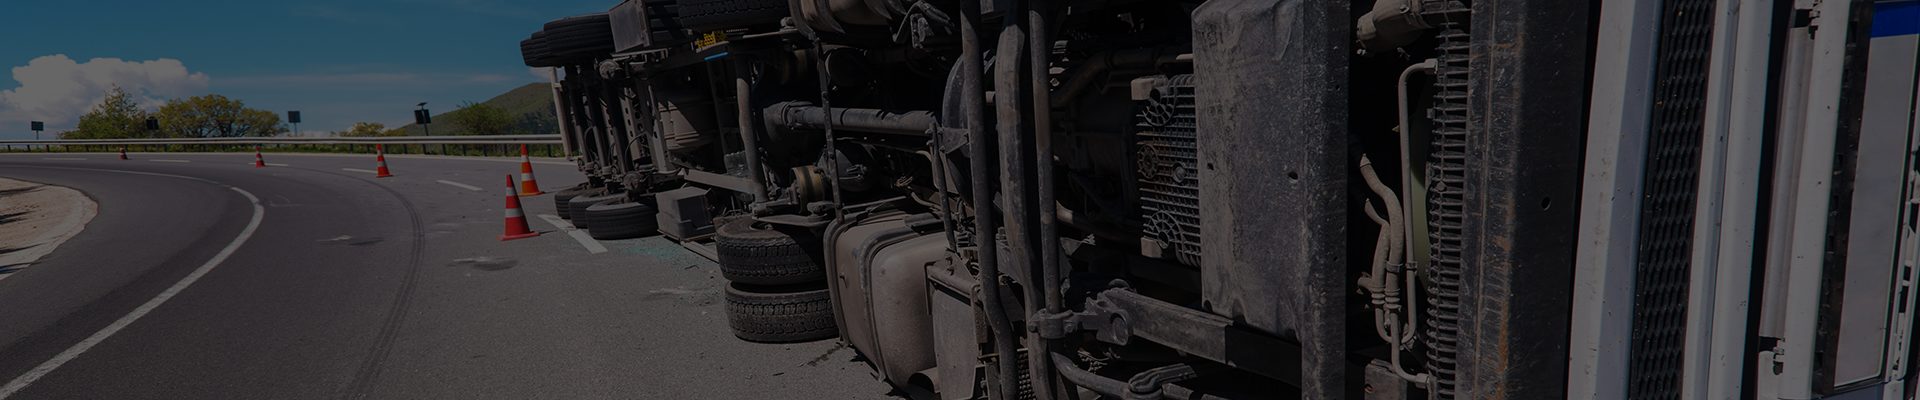 truck accident in arizona